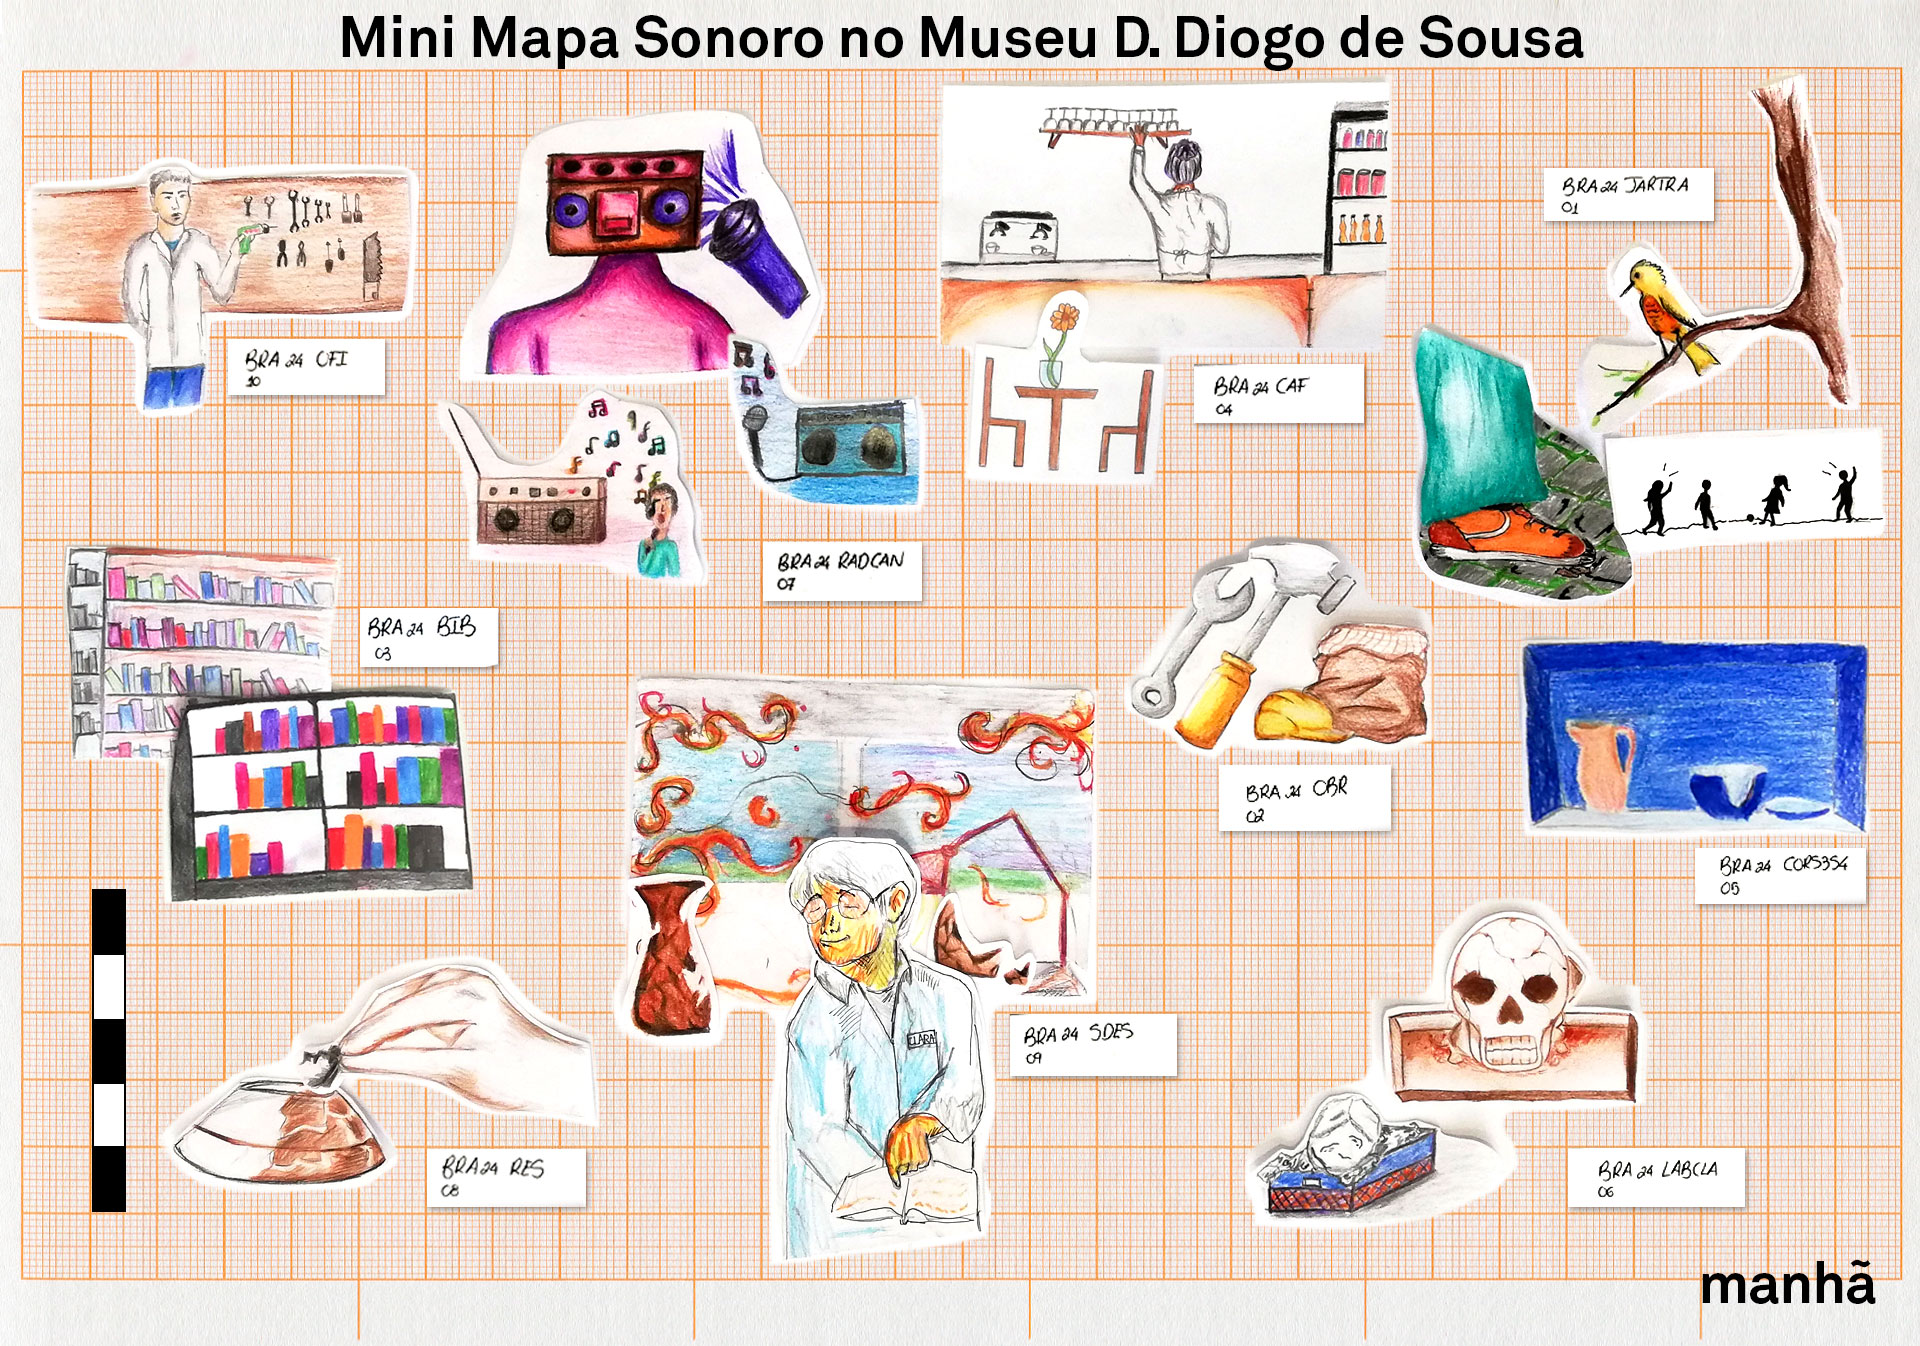 Mapa Mini Mapa Sonoro Mini Mapa Sonoro no Museu D. Diogo de Sousa - ES Sá de Miranda